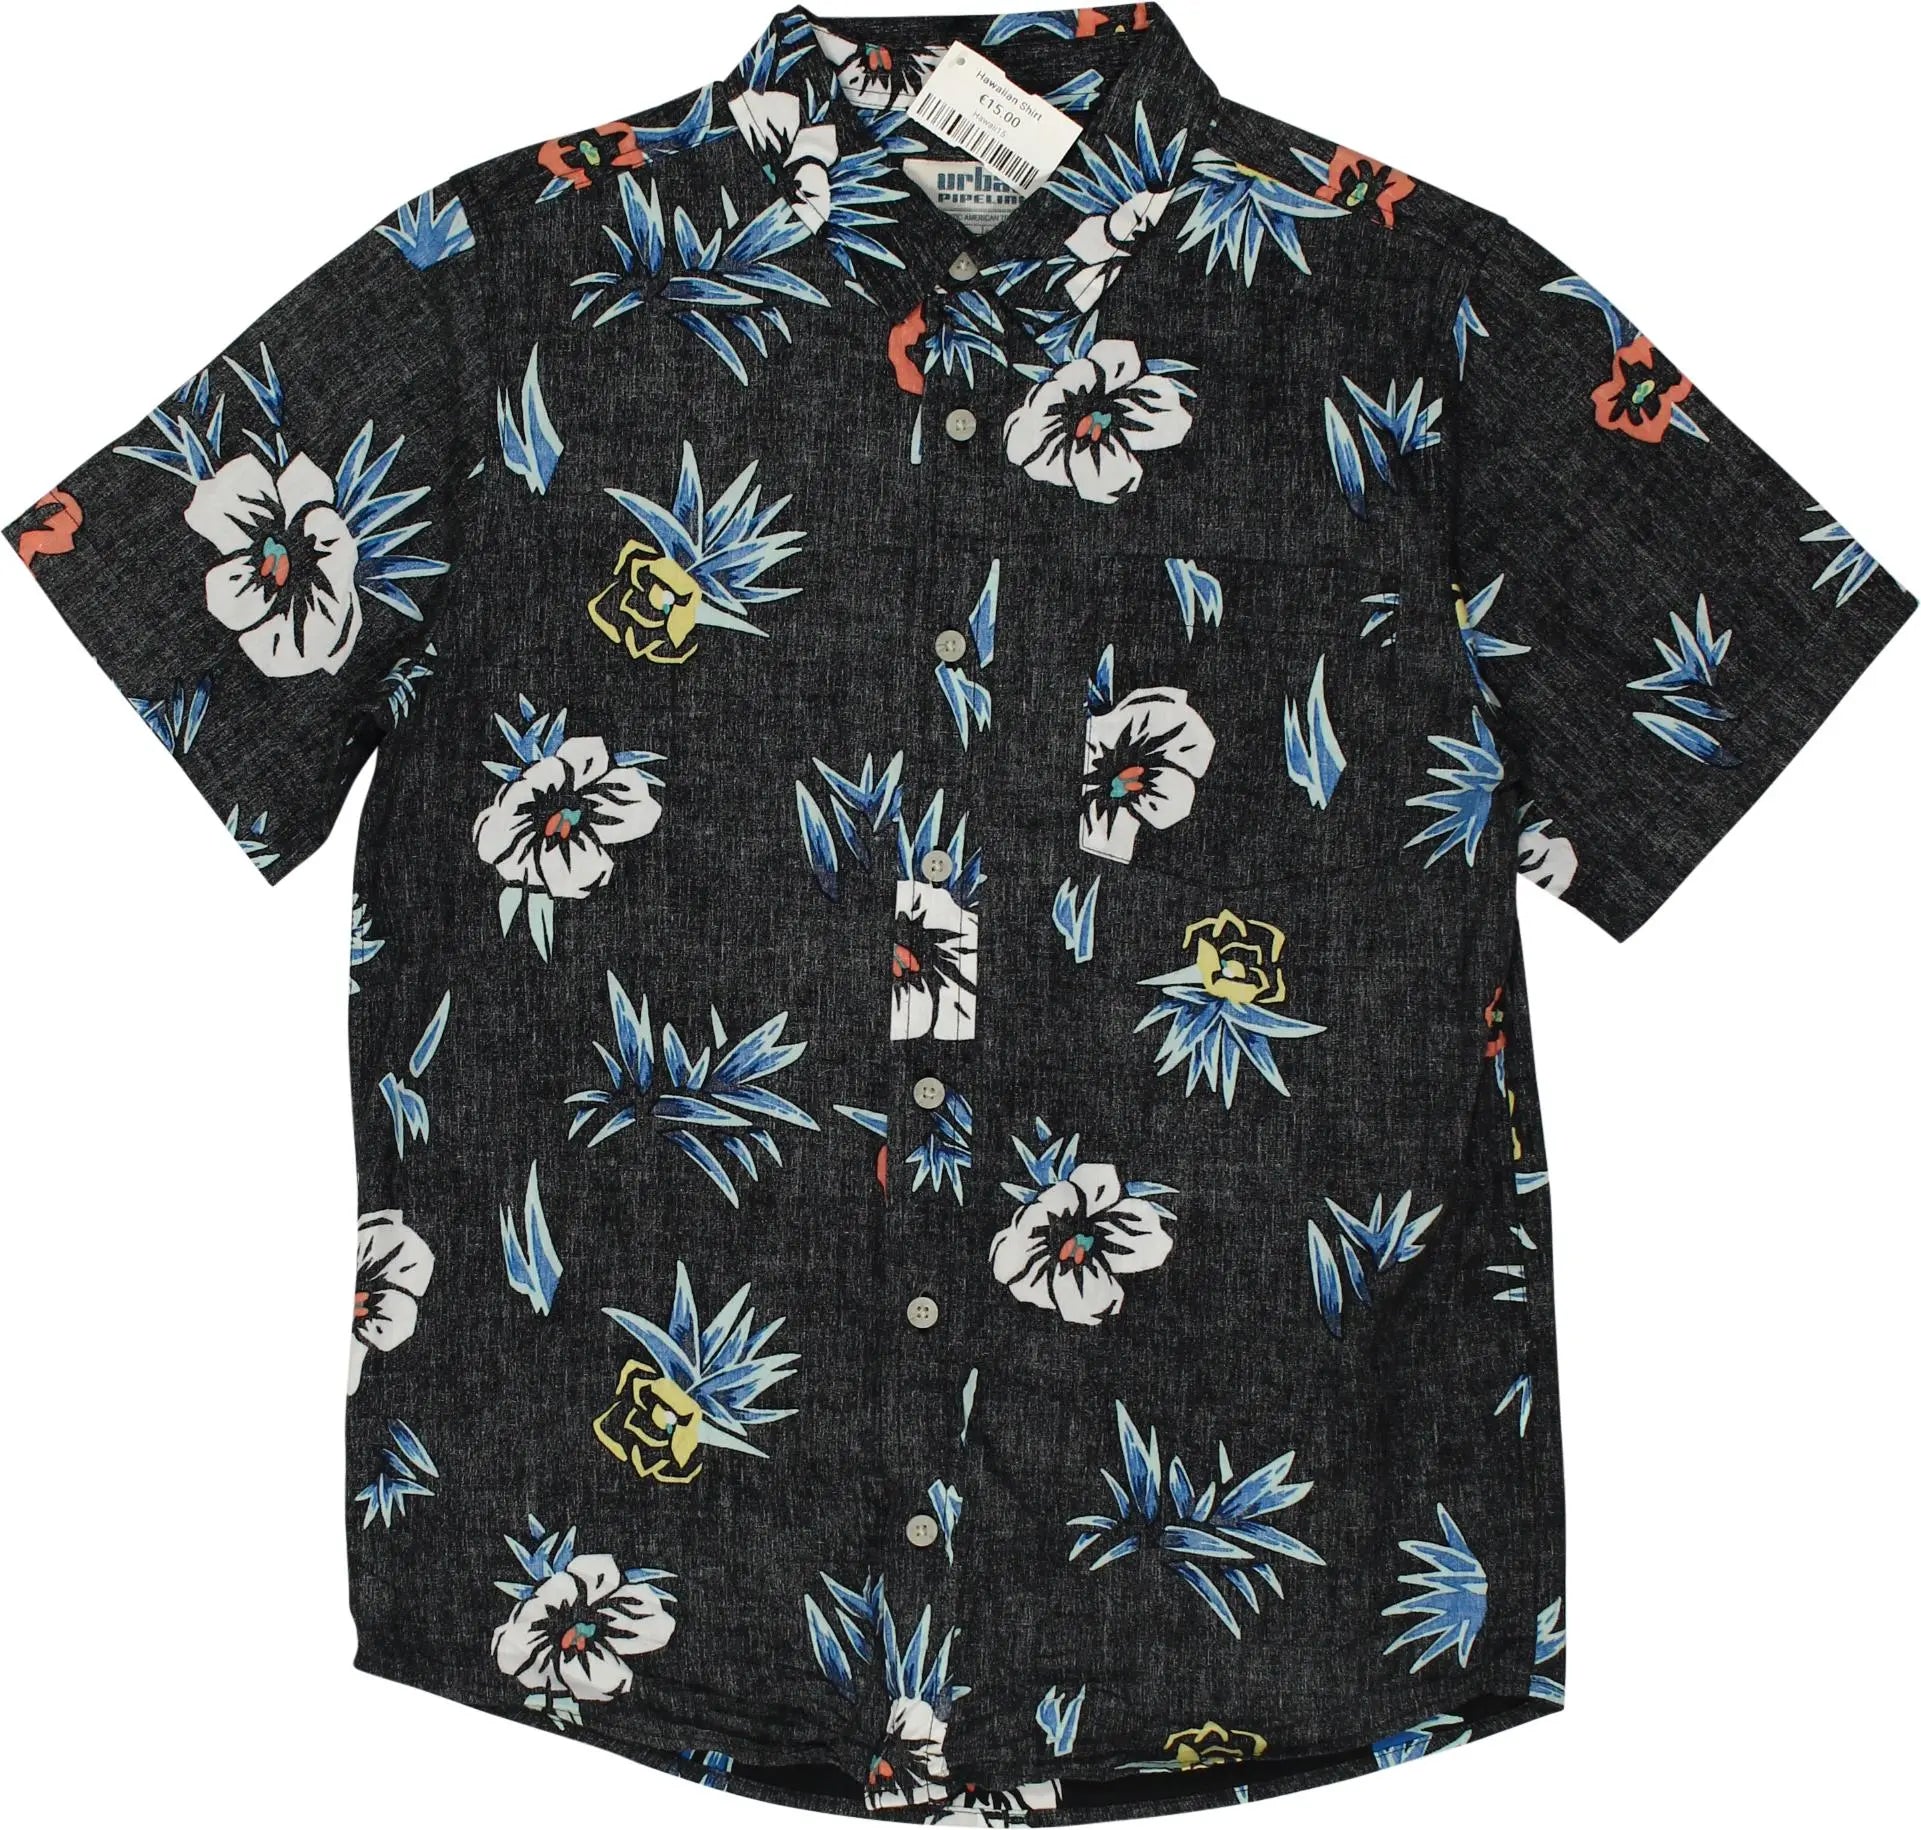 Maxwear - Hawaiian Shirt- ThriftTale.com - Vintage and second handclothing